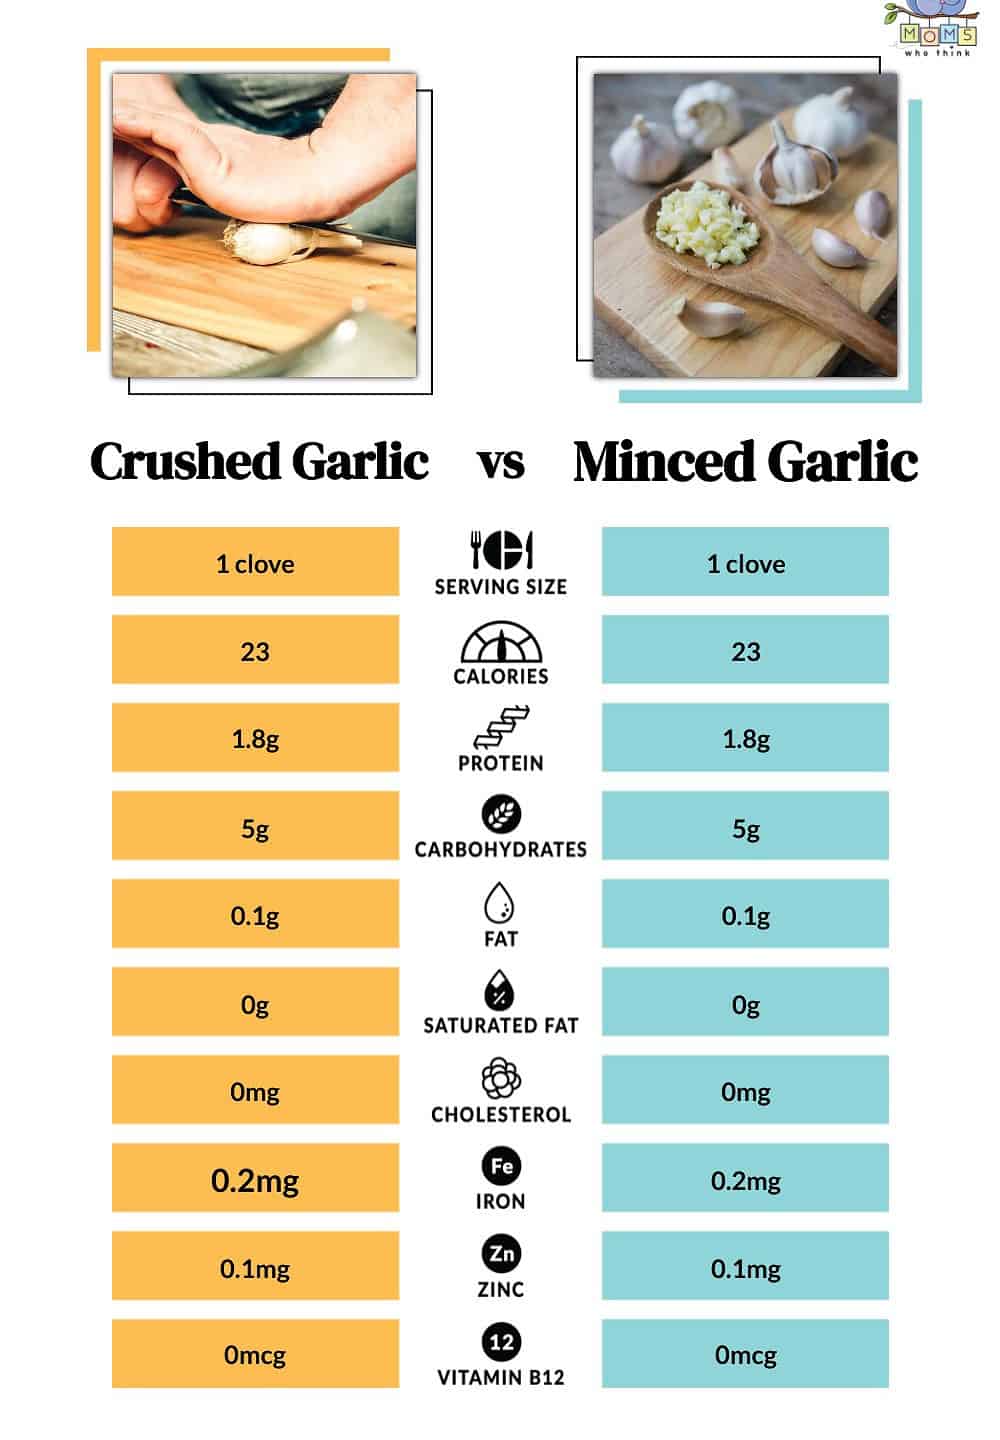 Crushed Garlic vs Minced Garlic Nutritional Facts